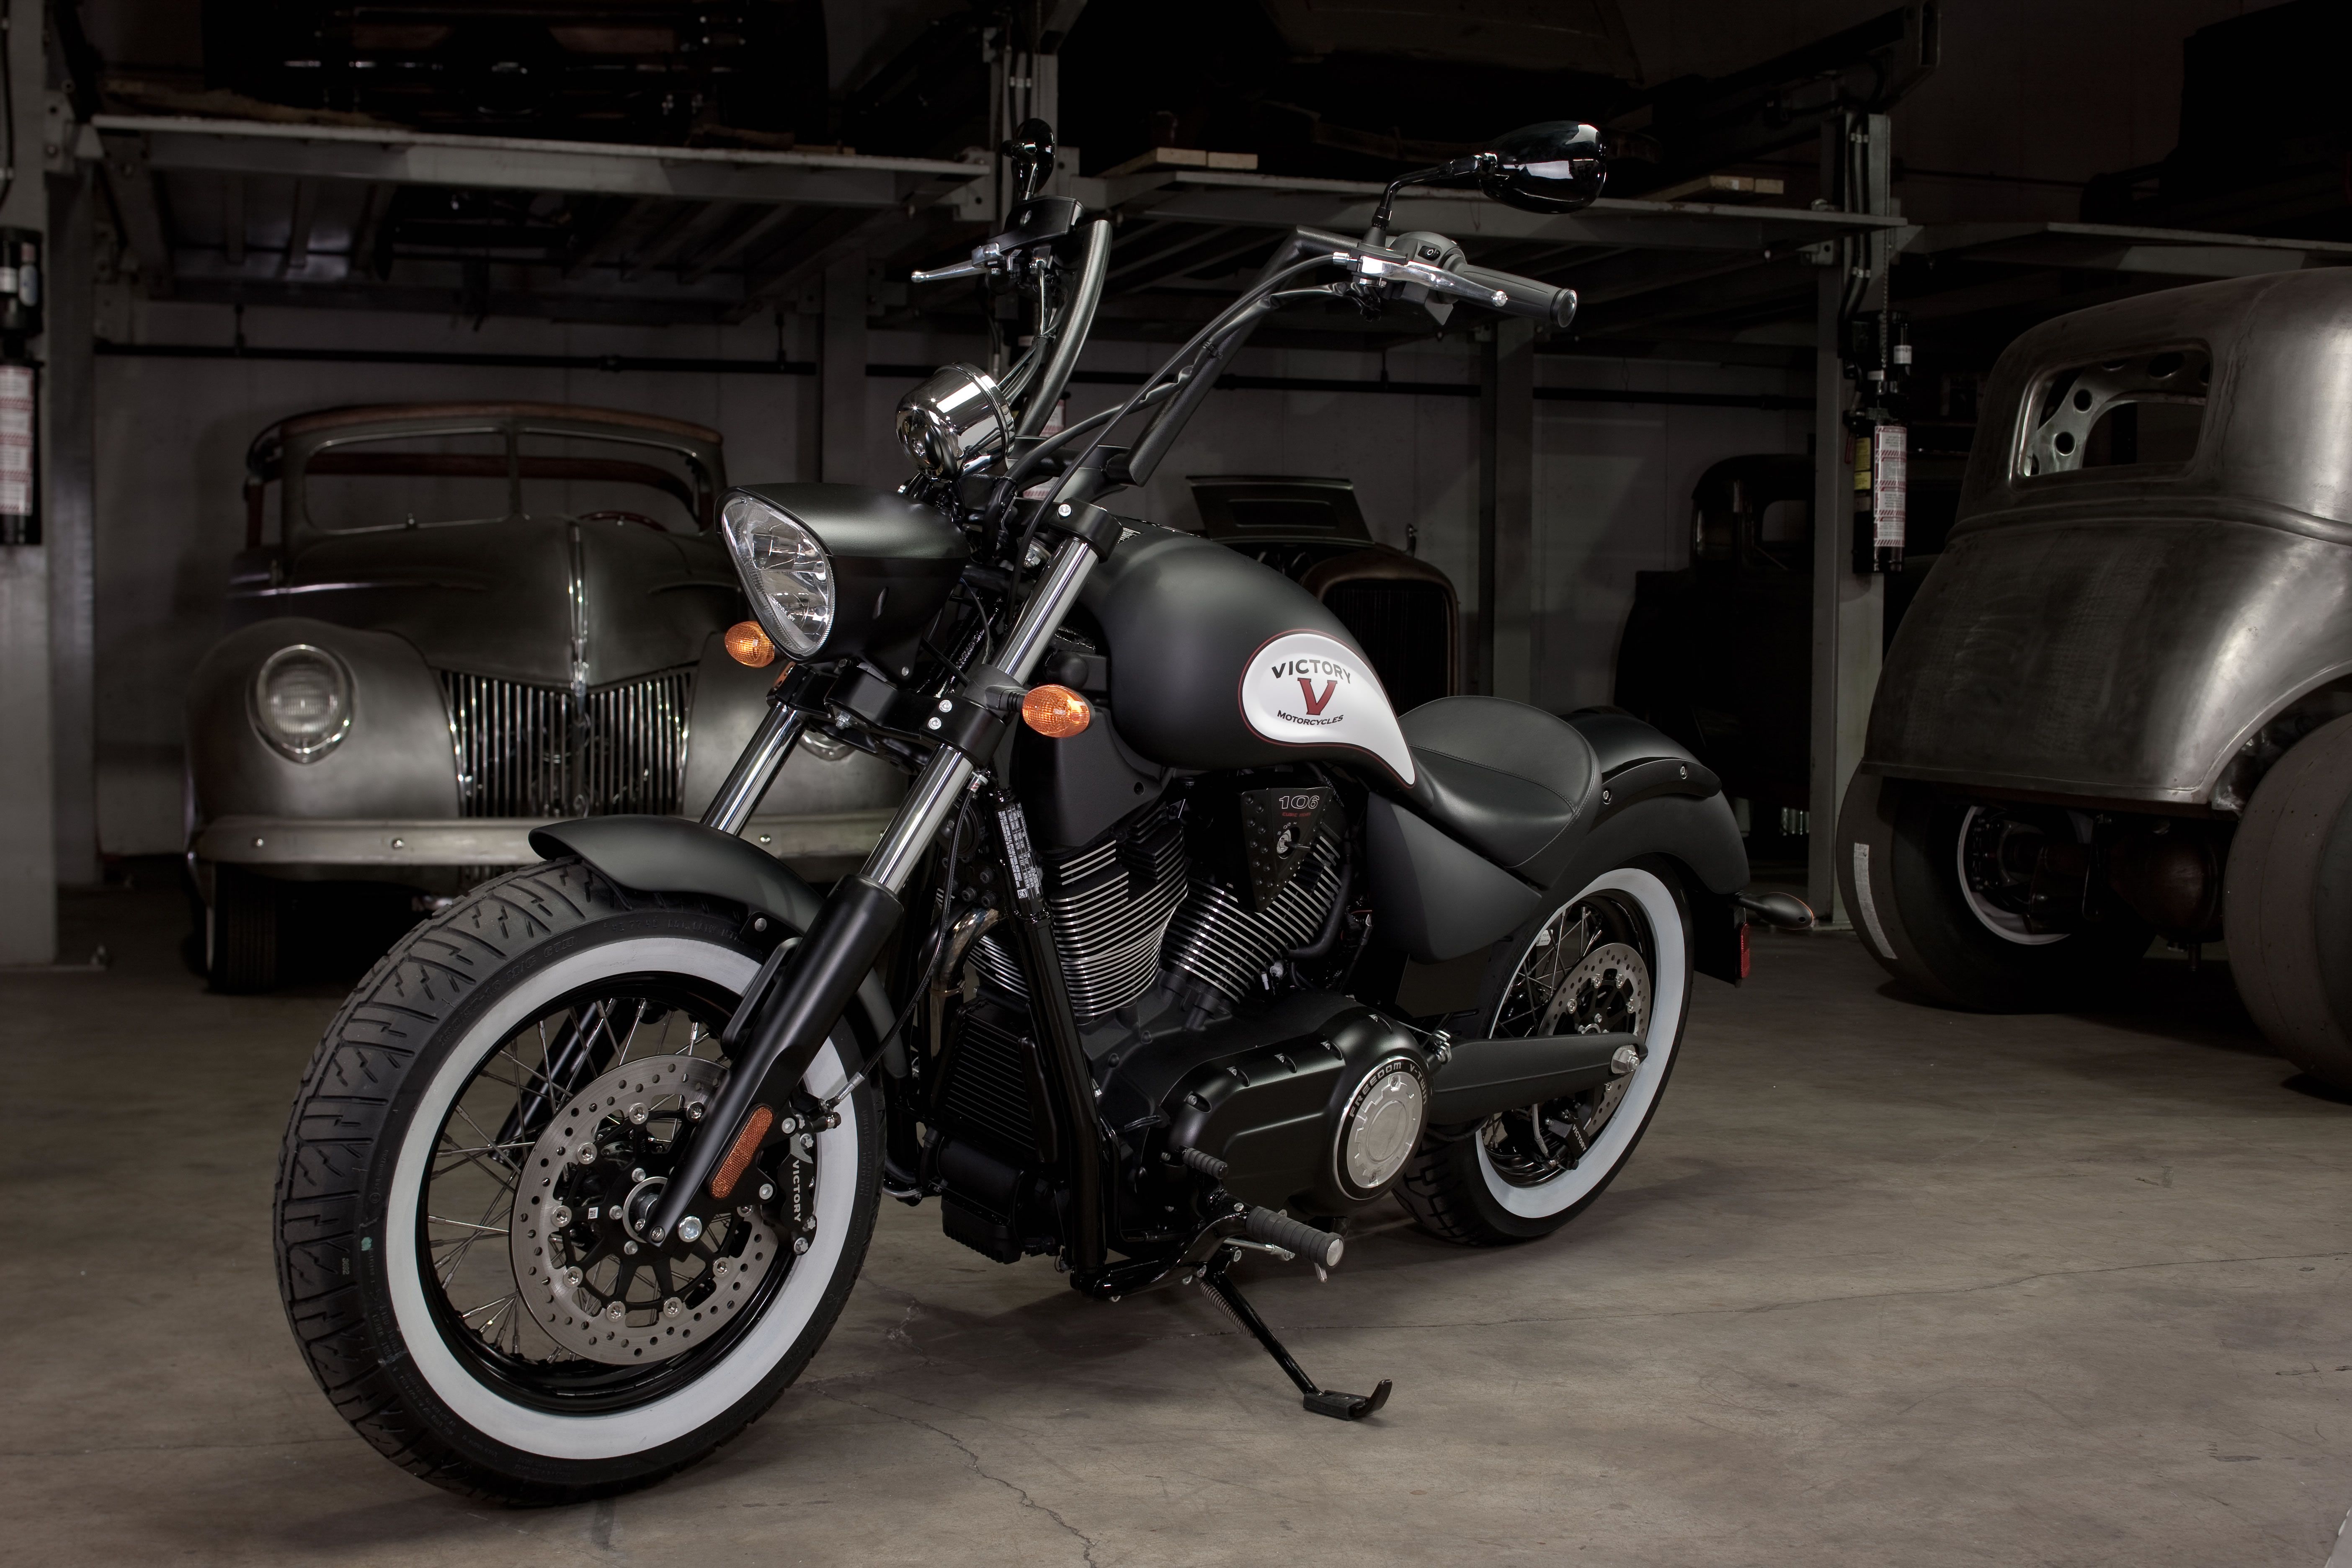 2012 Victory Motorcycles HIGH-BALL - 1731cc Standard Equipment & Specs